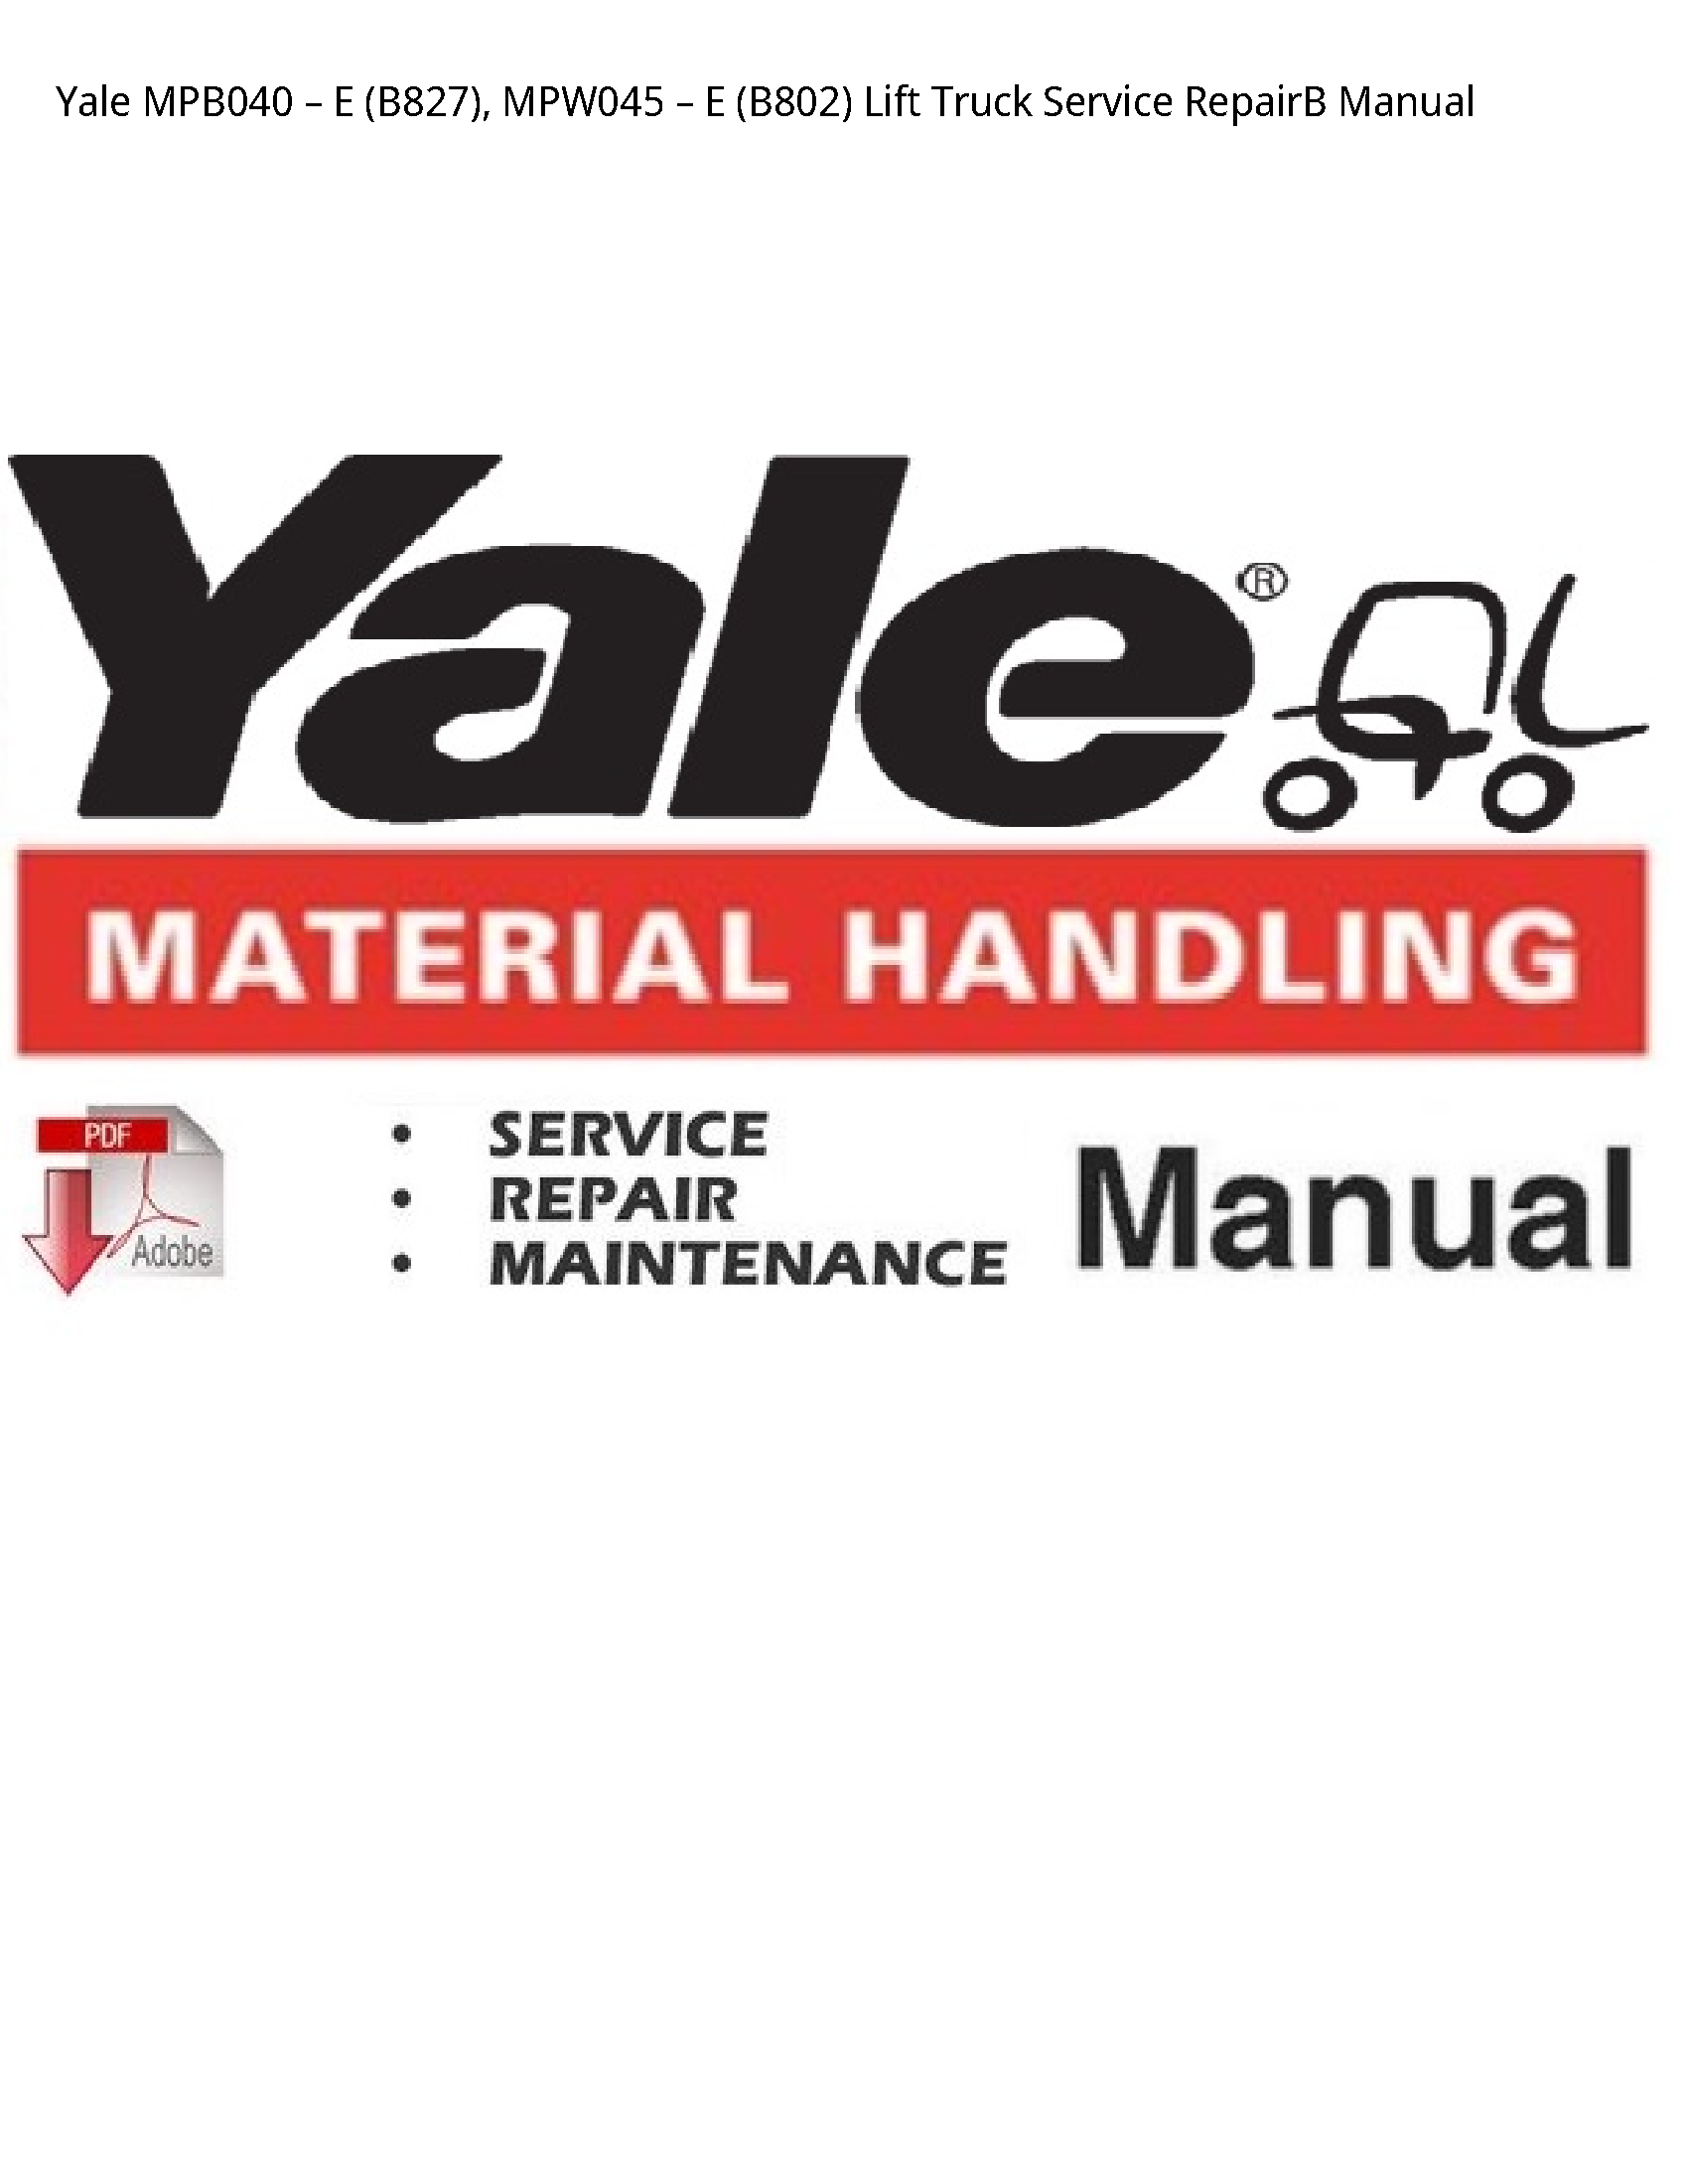 Yale MPB040 Lift Truck manual